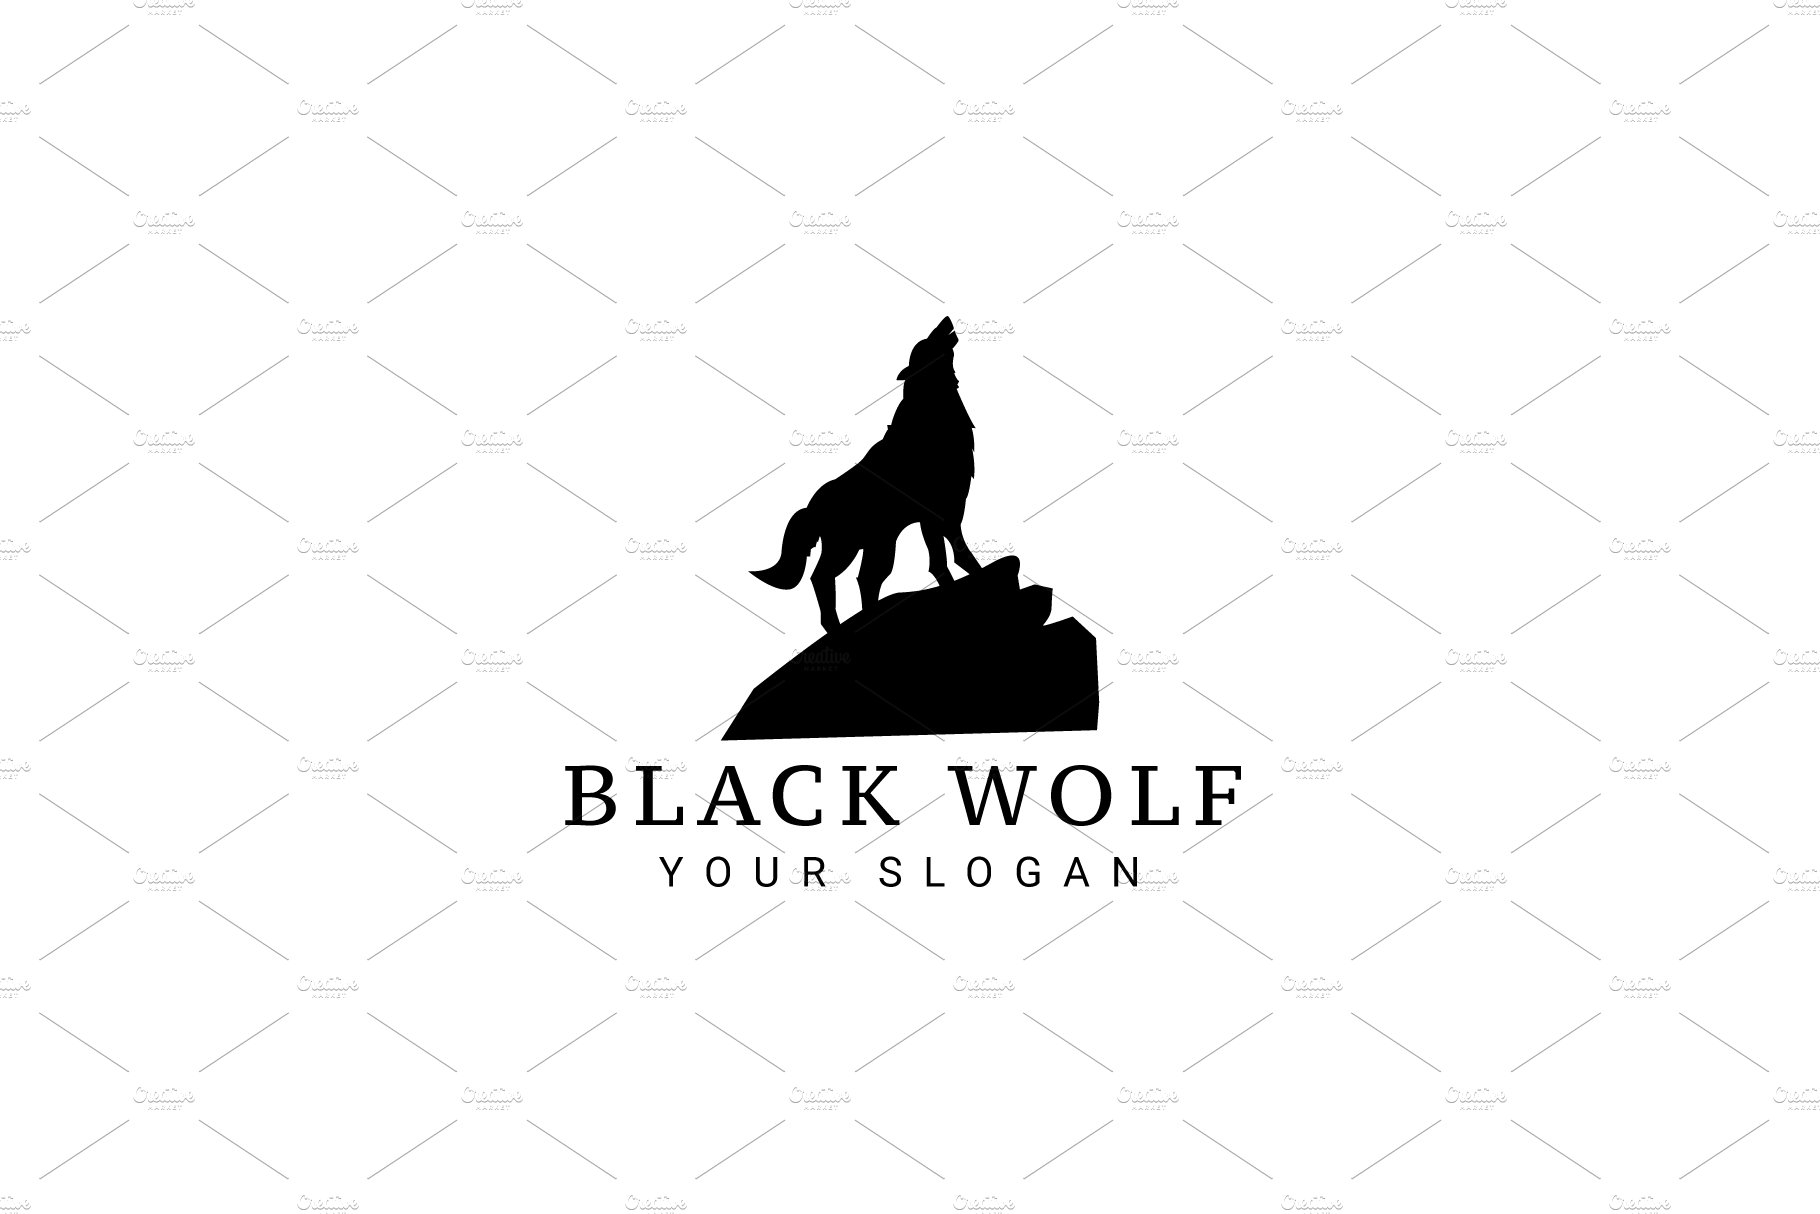 Black Wolf Logo Vector Illustration cover image.